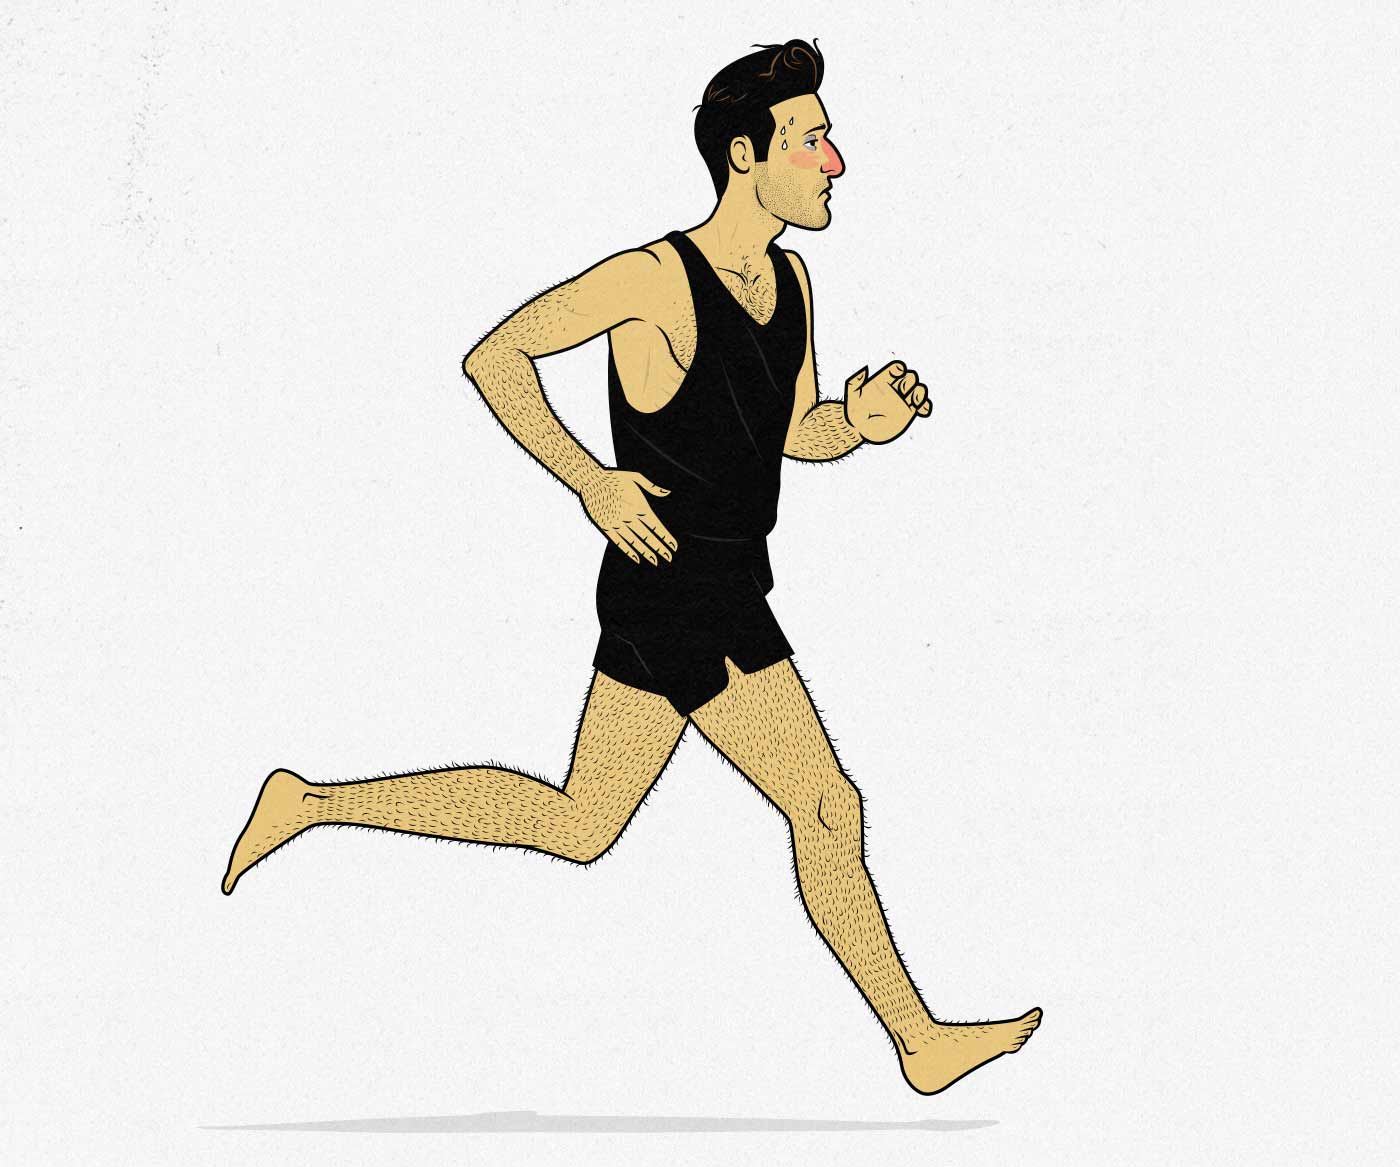 Illustration of a sick man jogging, doing cardio.